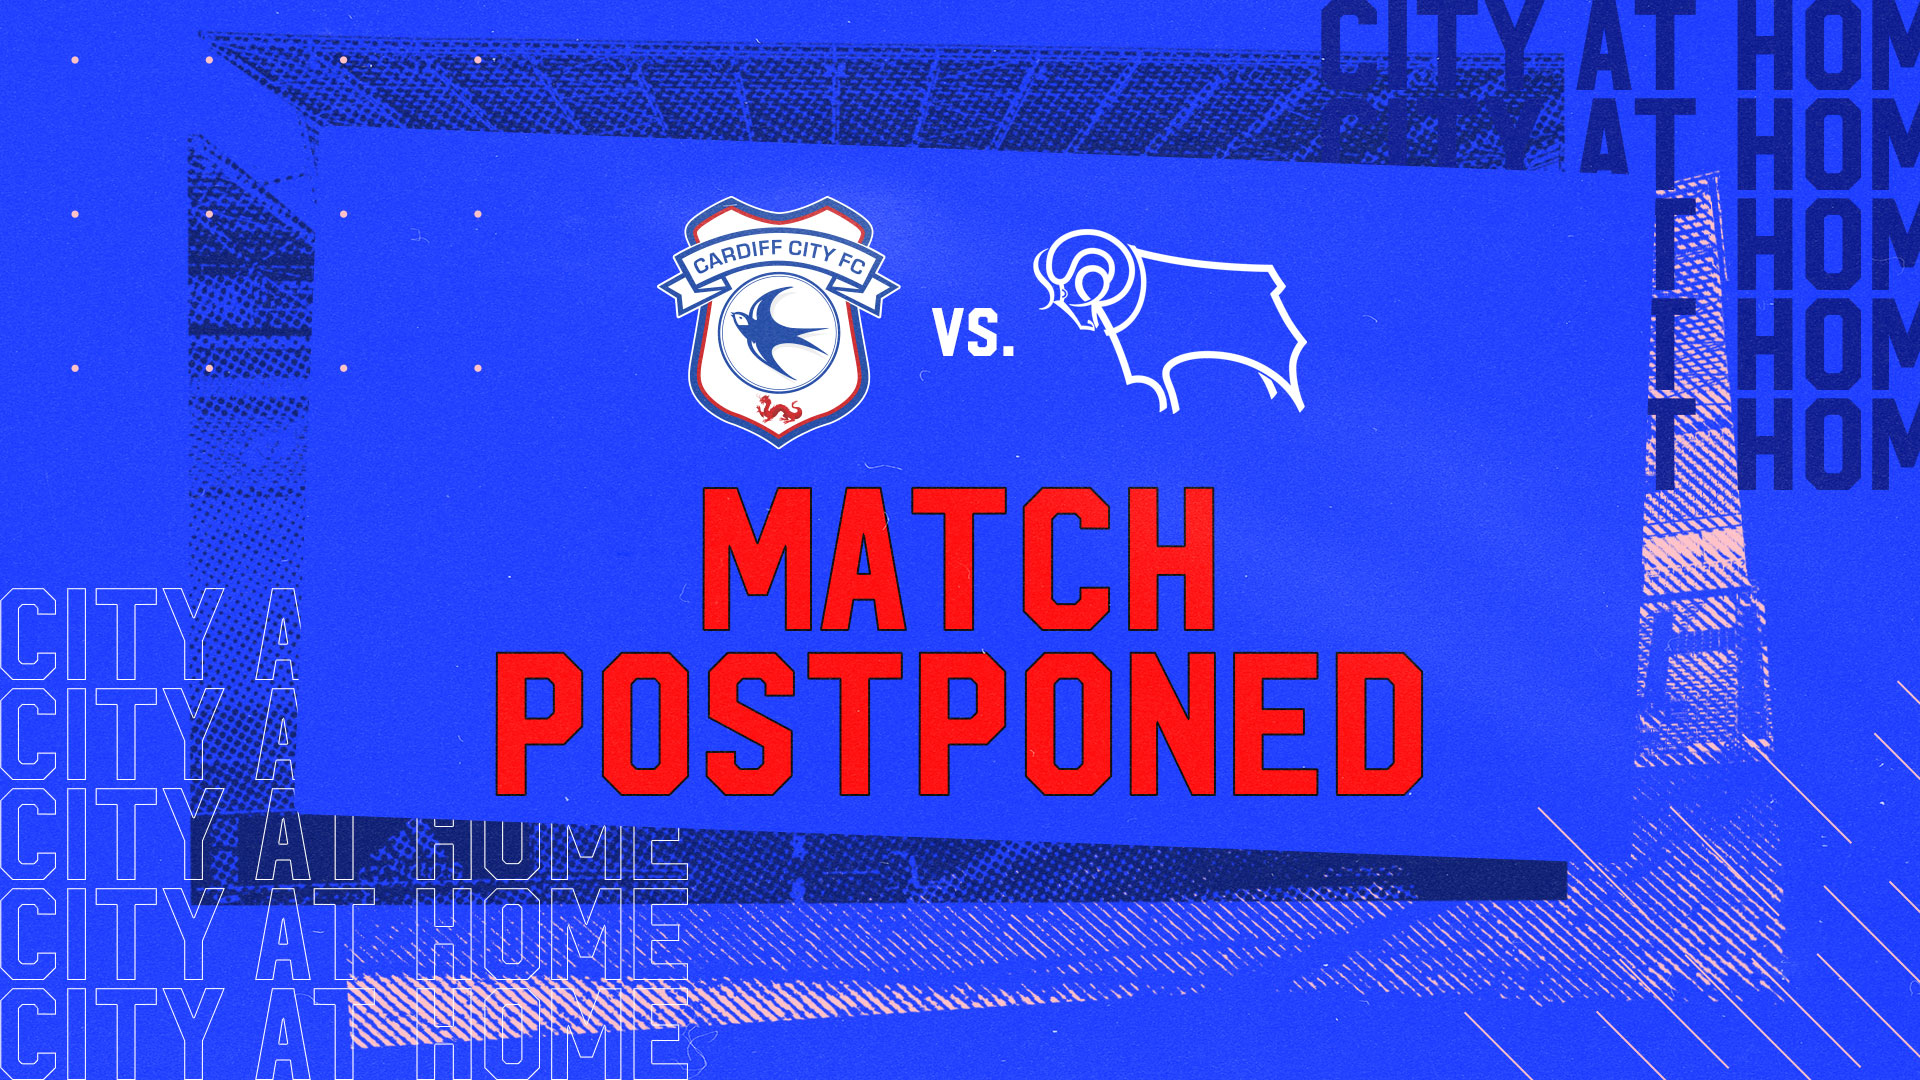 The Bluebirds vs. Derby County has been postponed...